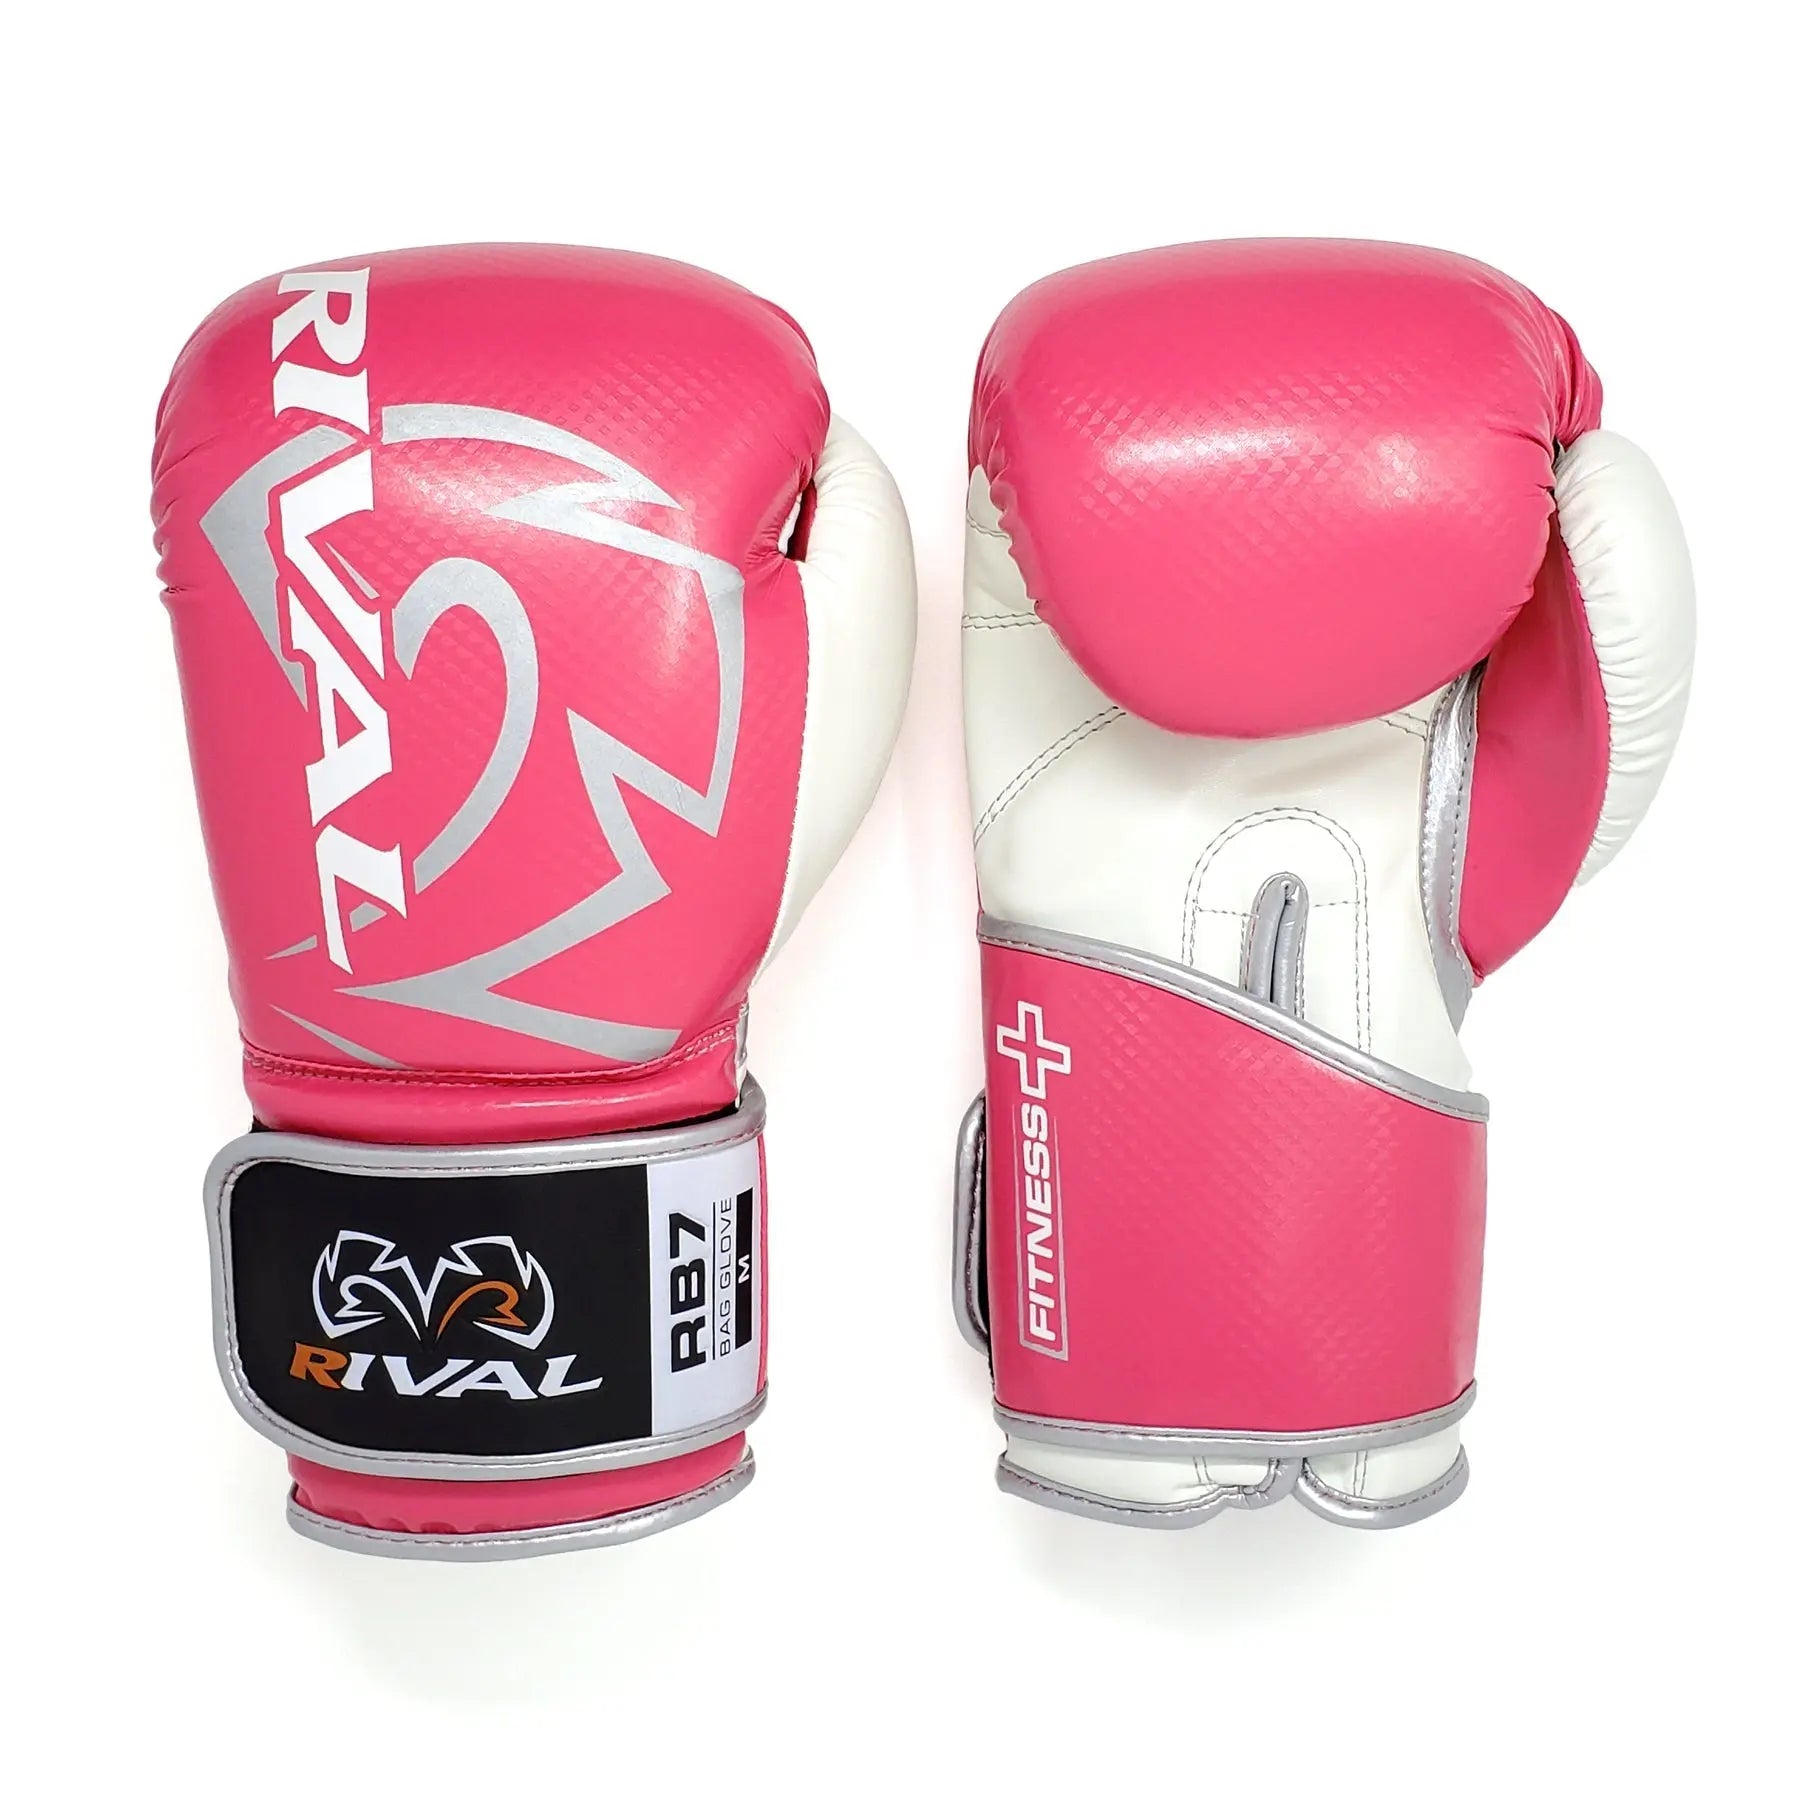 Rival RB7 Fitnessplus Bag Boxing Gloves - Black Gold Rival